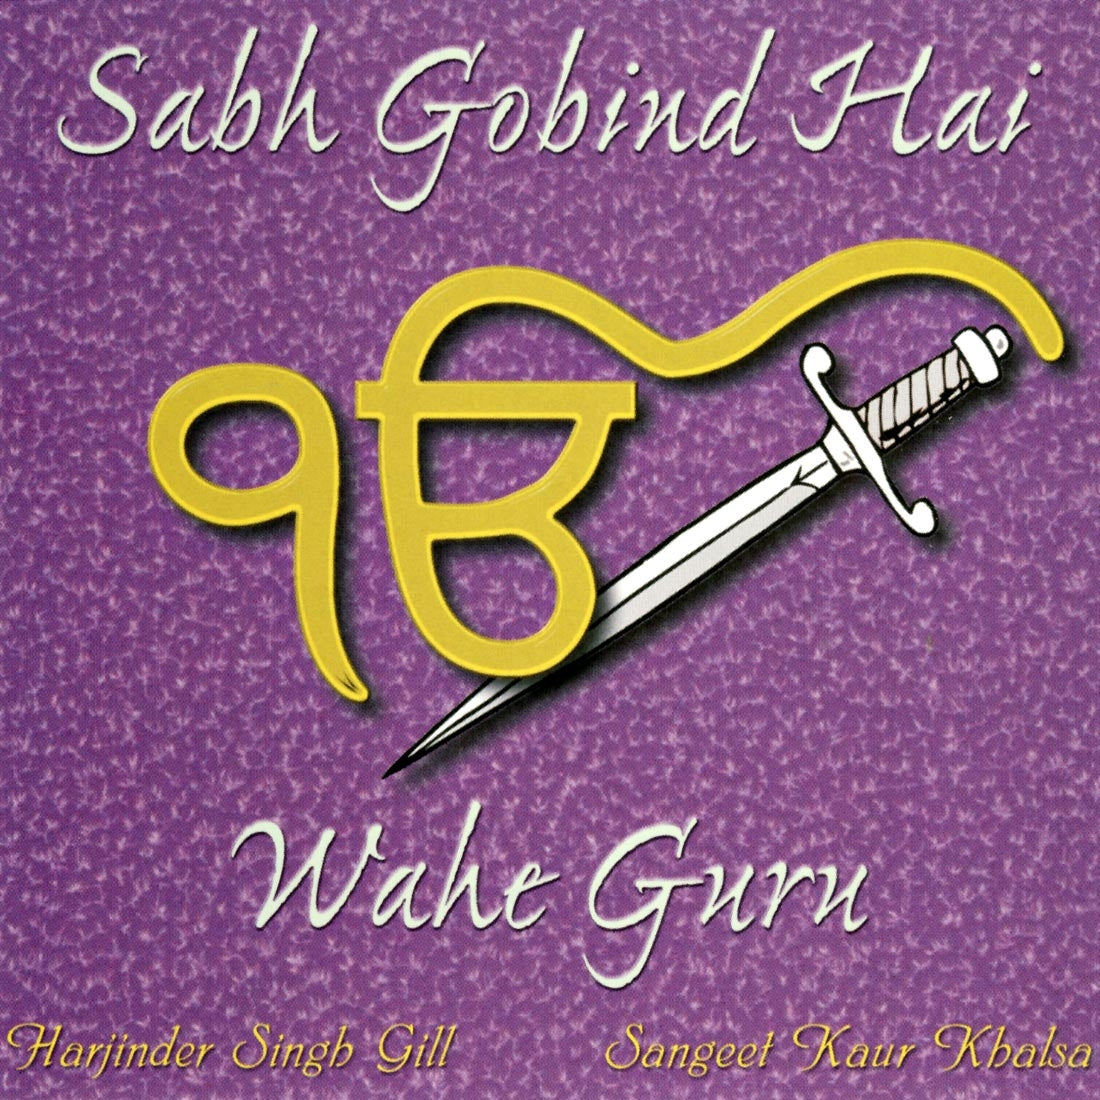 Sabh Gobind Hai - Sangeet Kaur complete